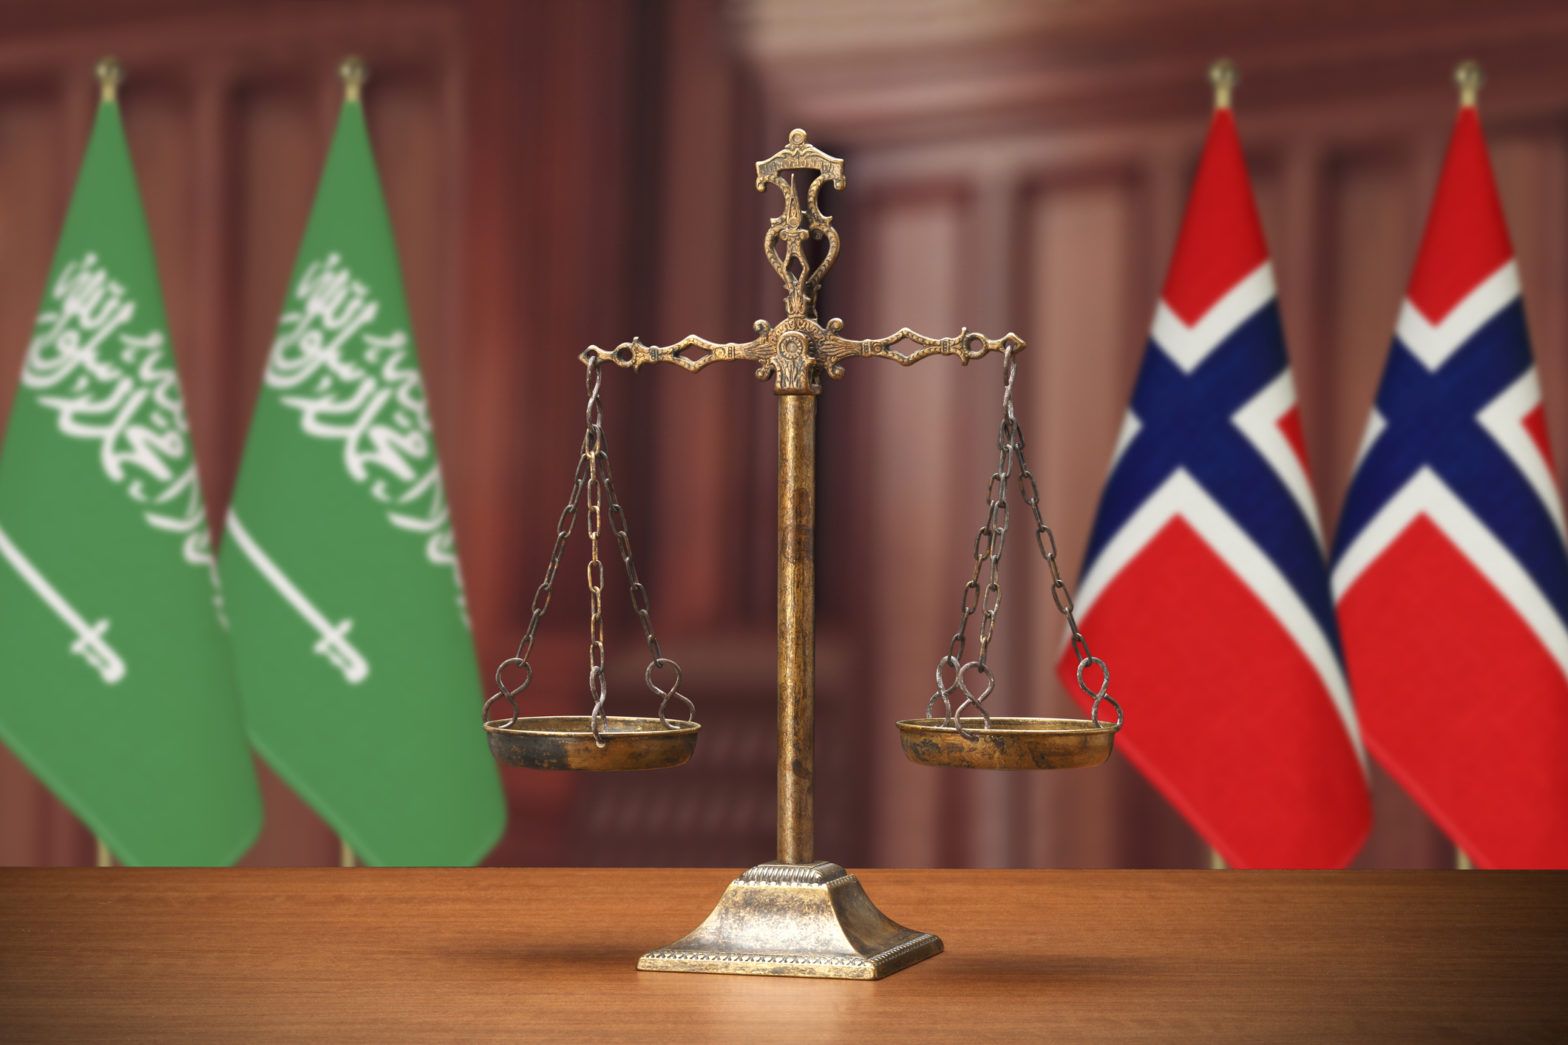 Norwegian selectors ‘ashamed’ by sovereign fund’s Saudi stance